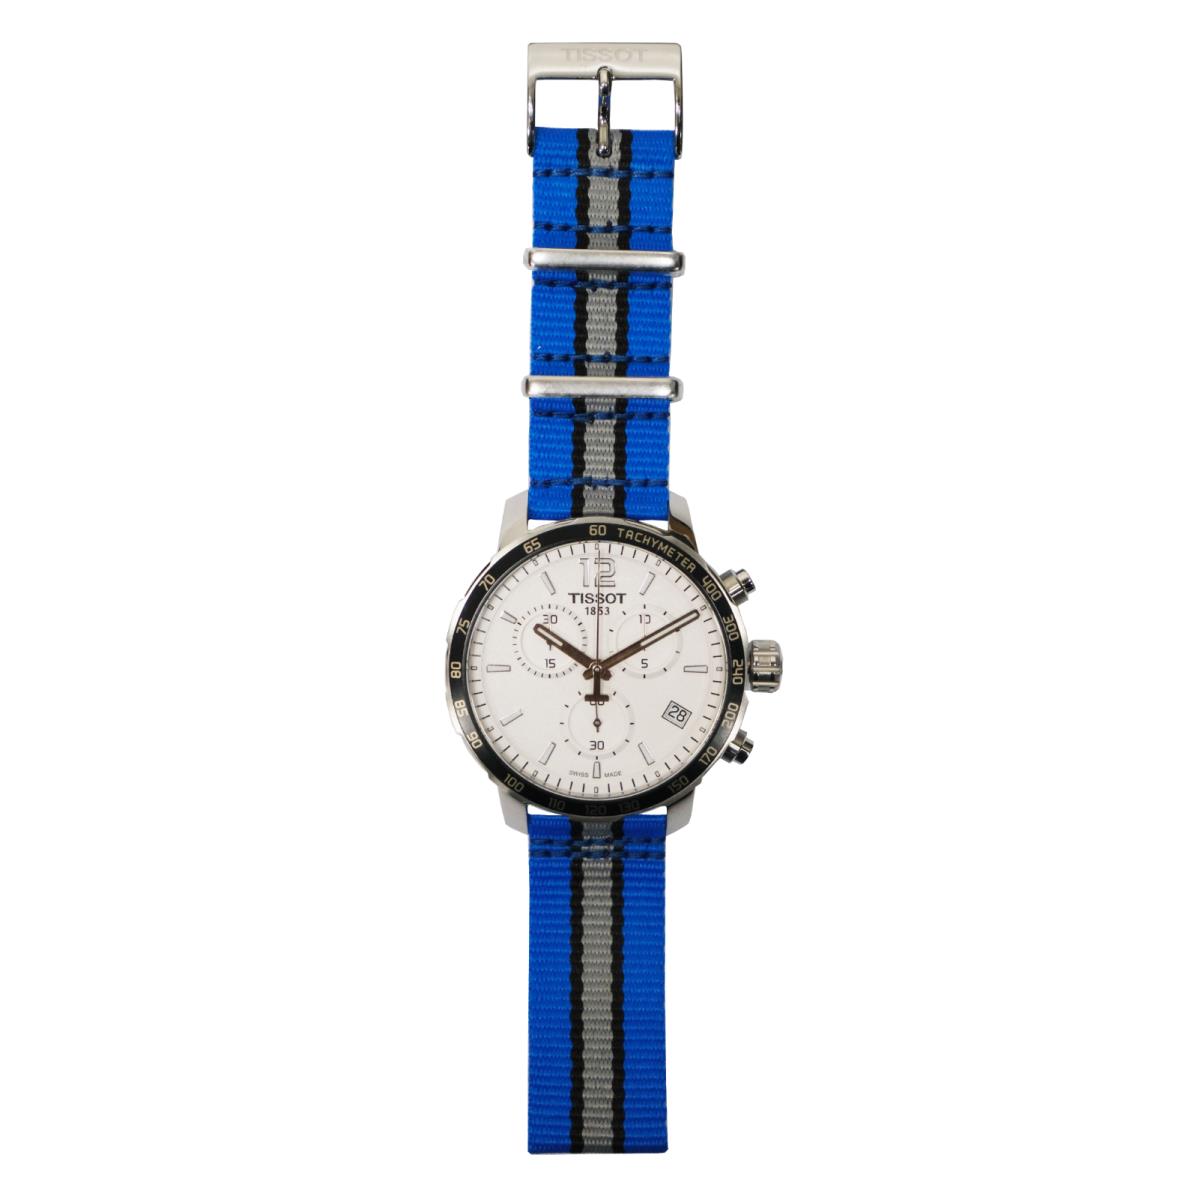 Tissot watch  - Silver Dial, Light Blue Band